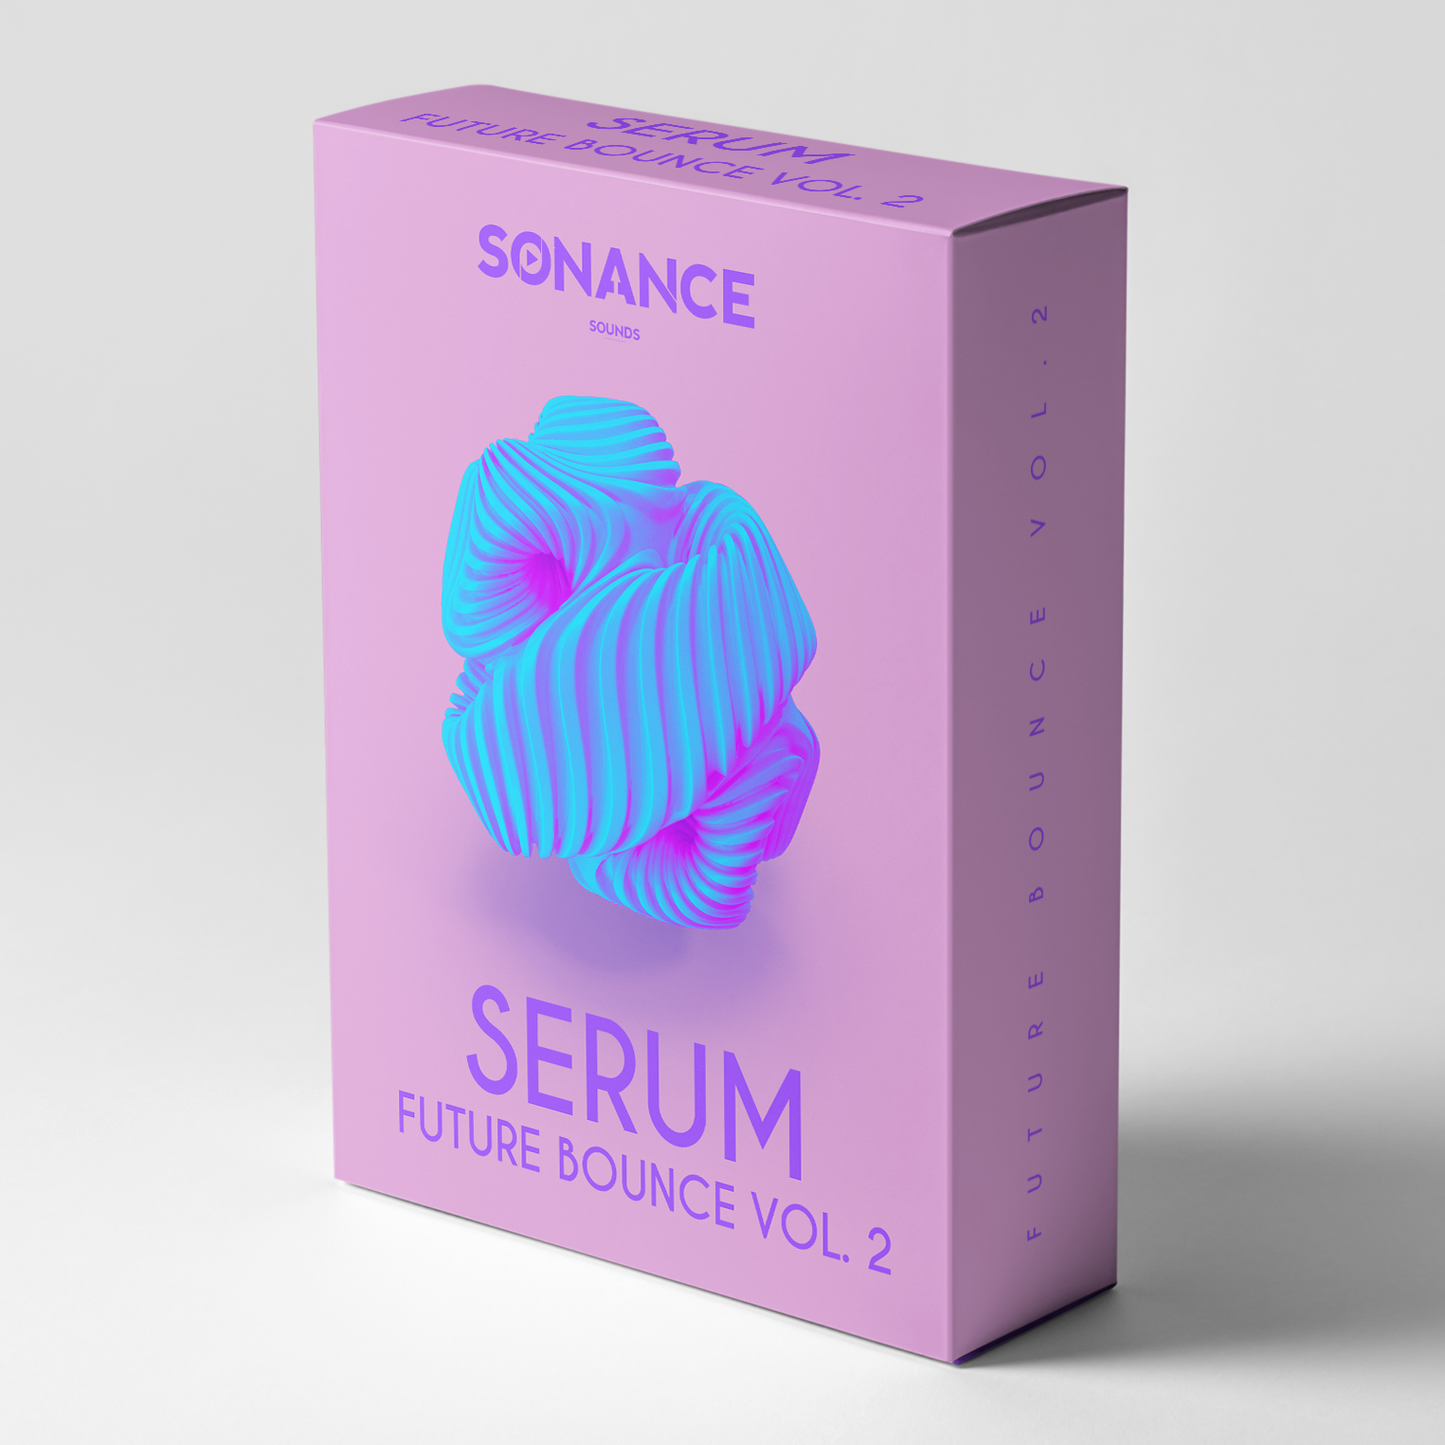 Copy of Sonance Sounds - Future Bounce Vol. 2